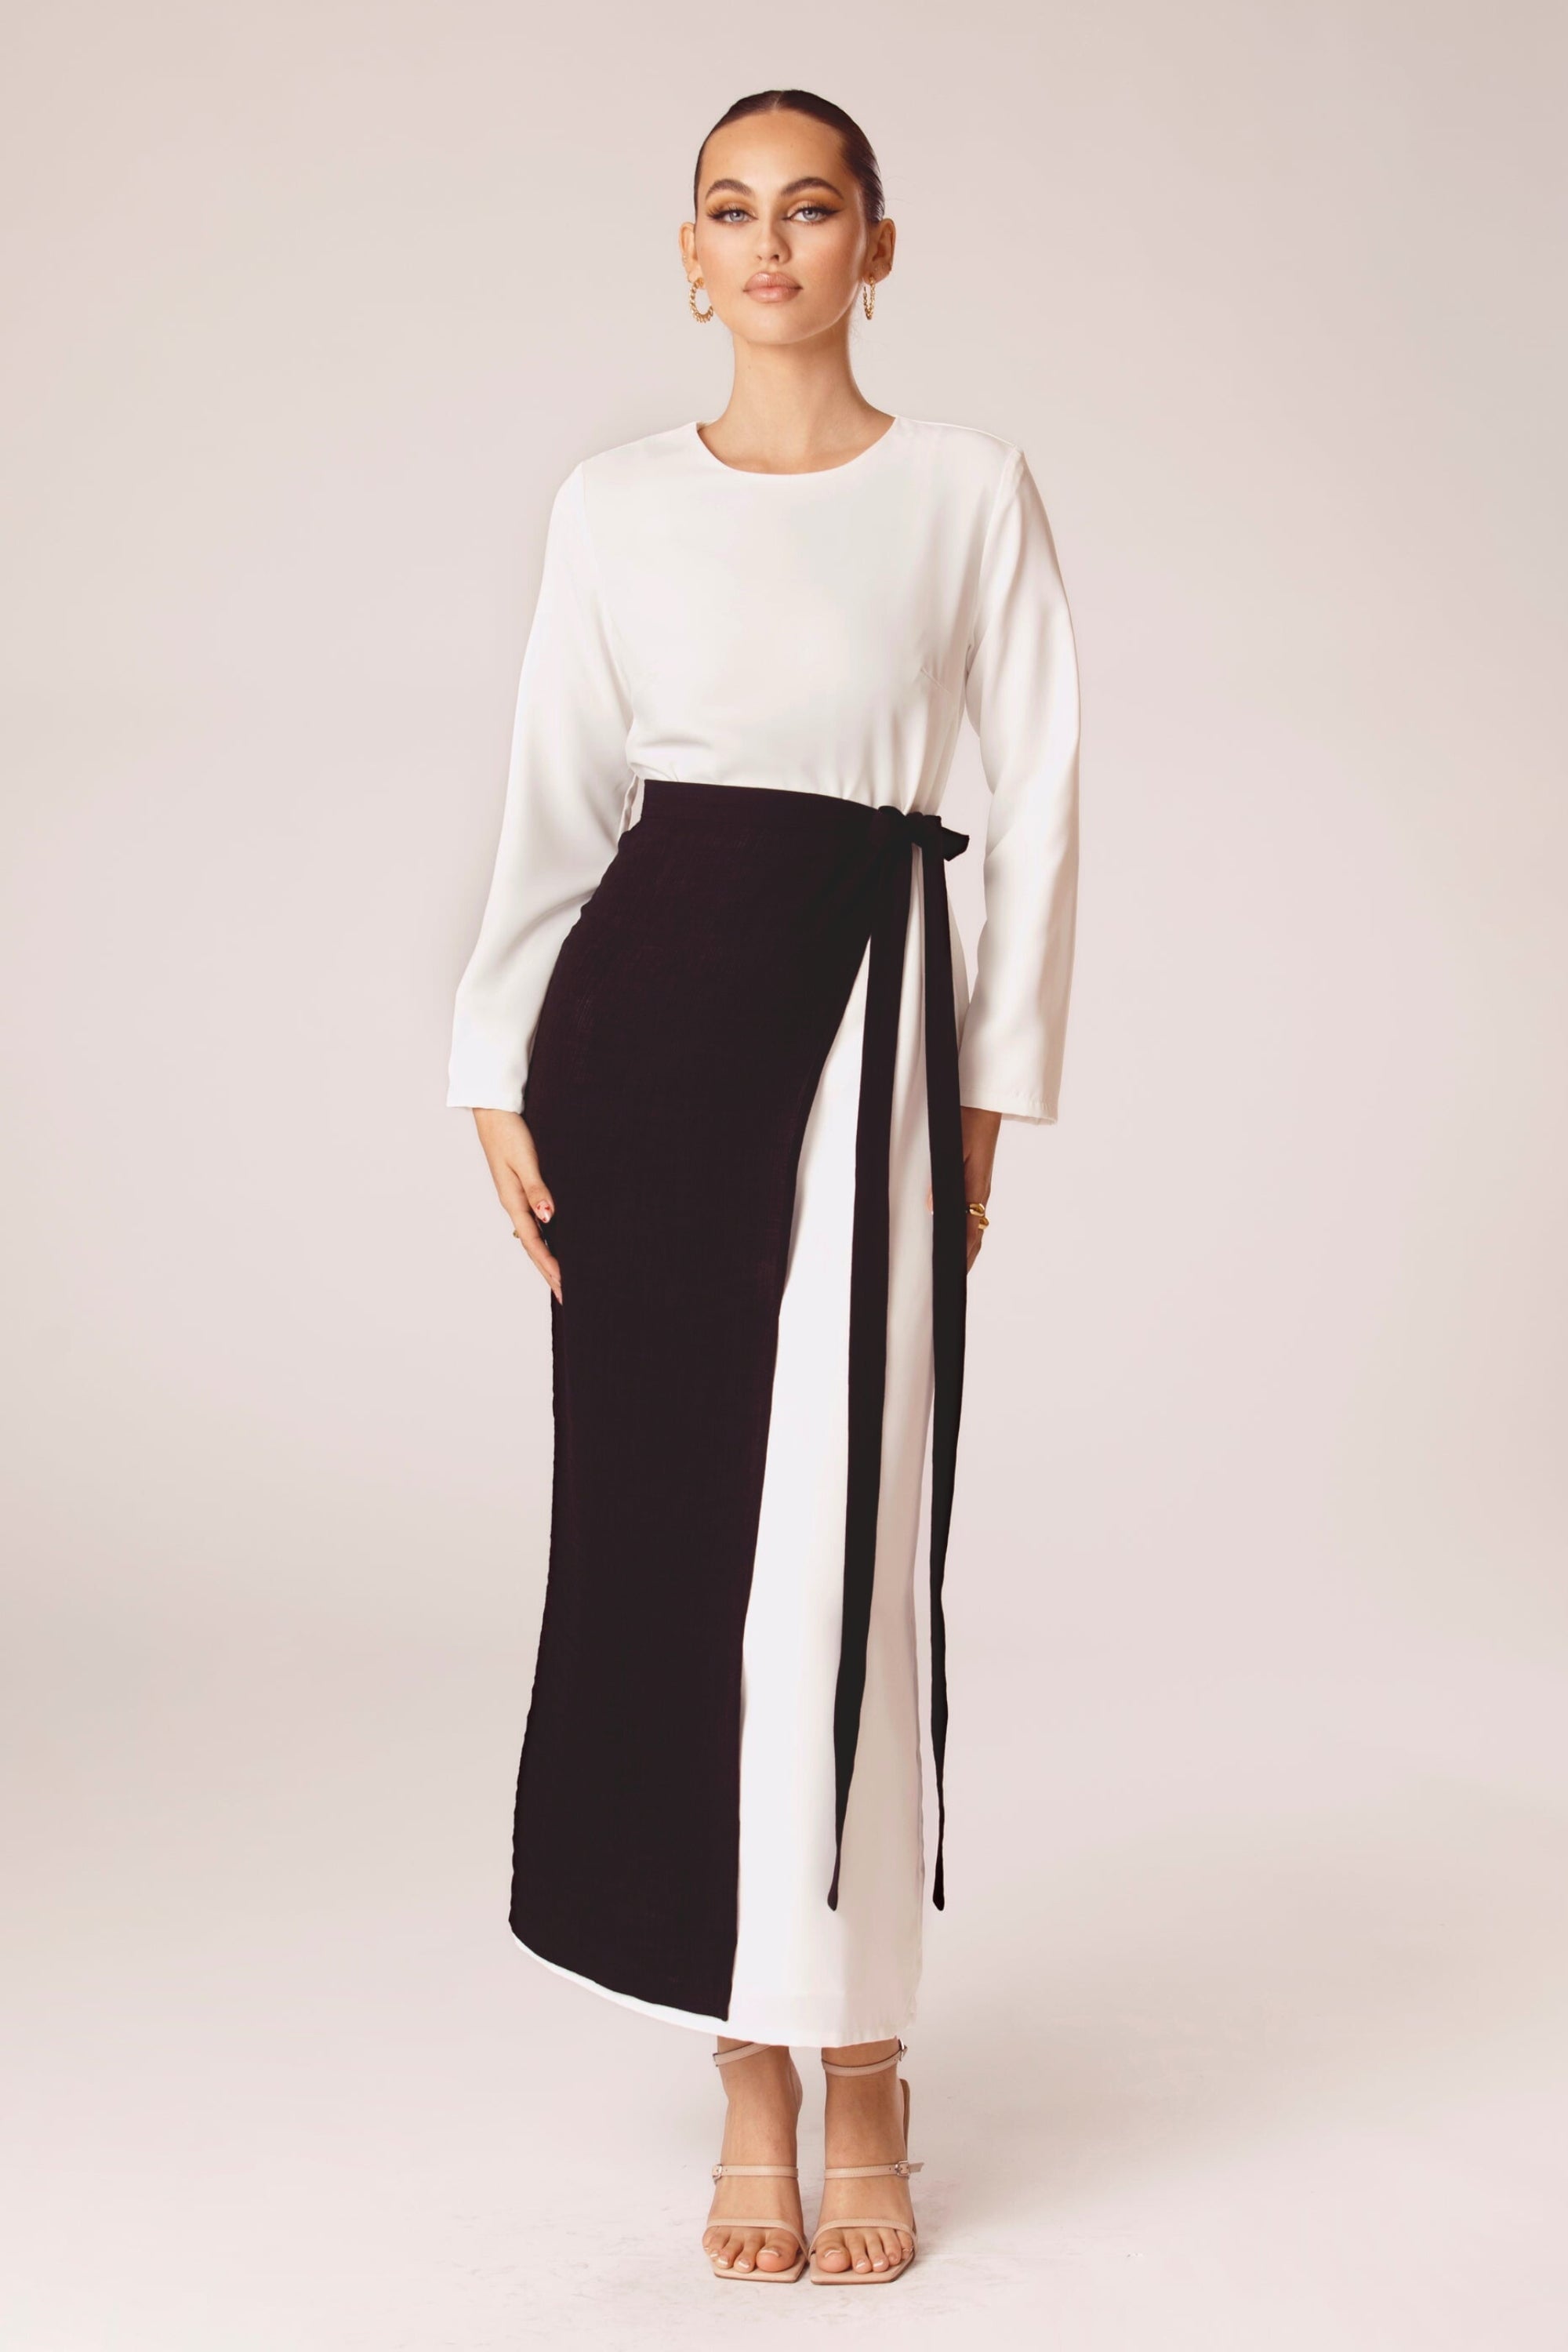 Rana Textured Overlay Tie Skirt - Espresso Clothing Veiled Collection 